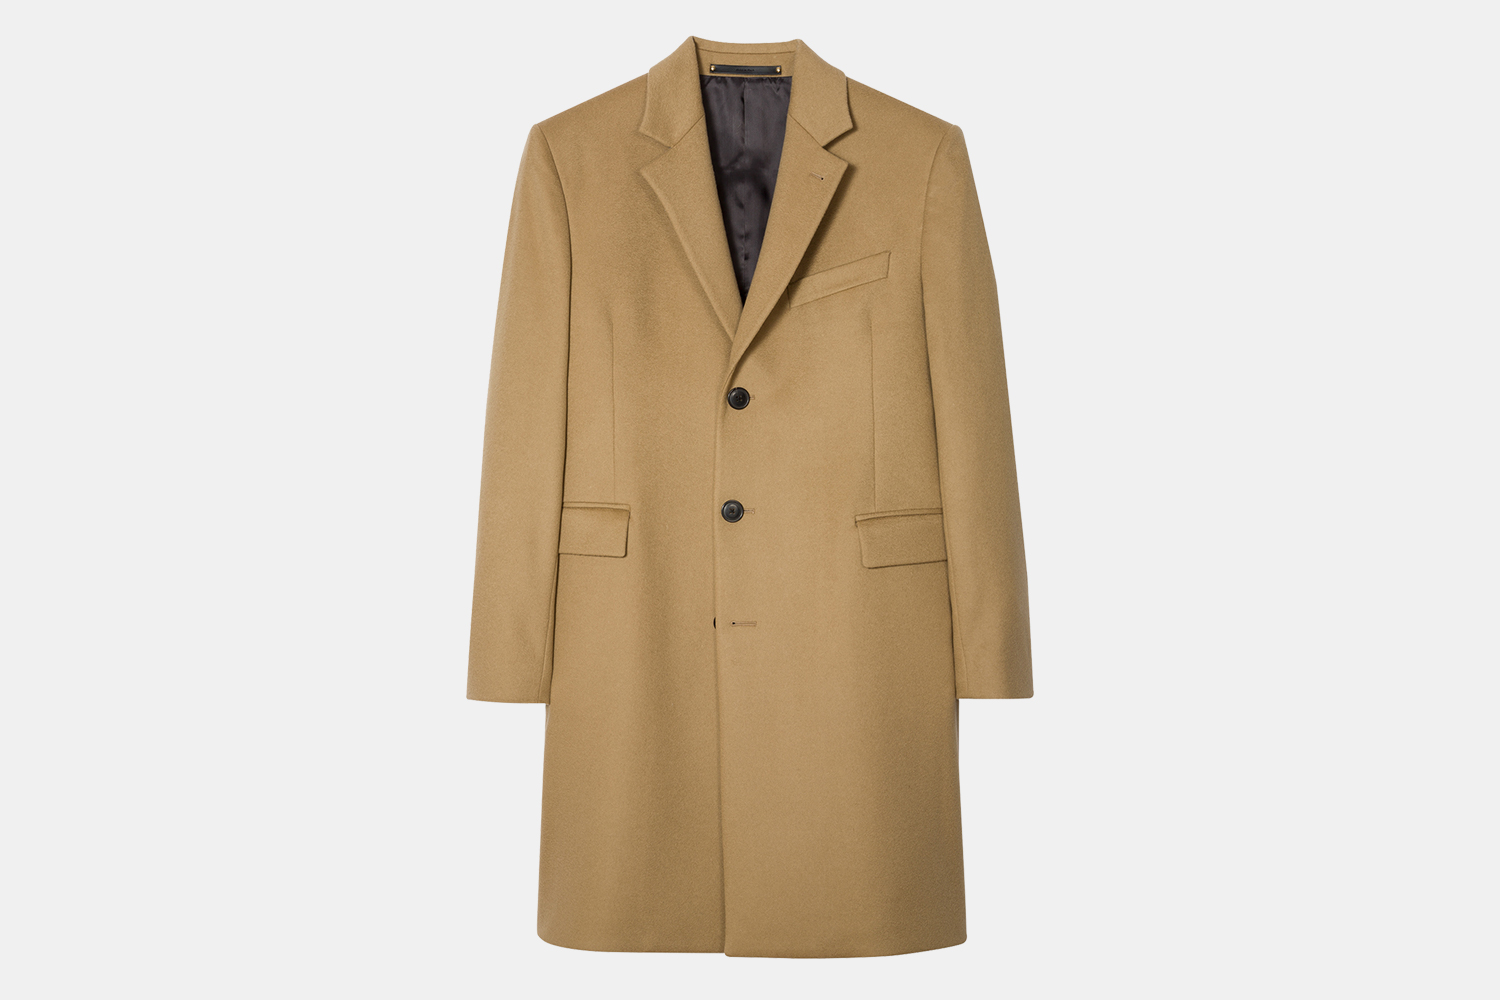 Paul Smith Men's Sand Wool-Cashmere Overcoat Discount